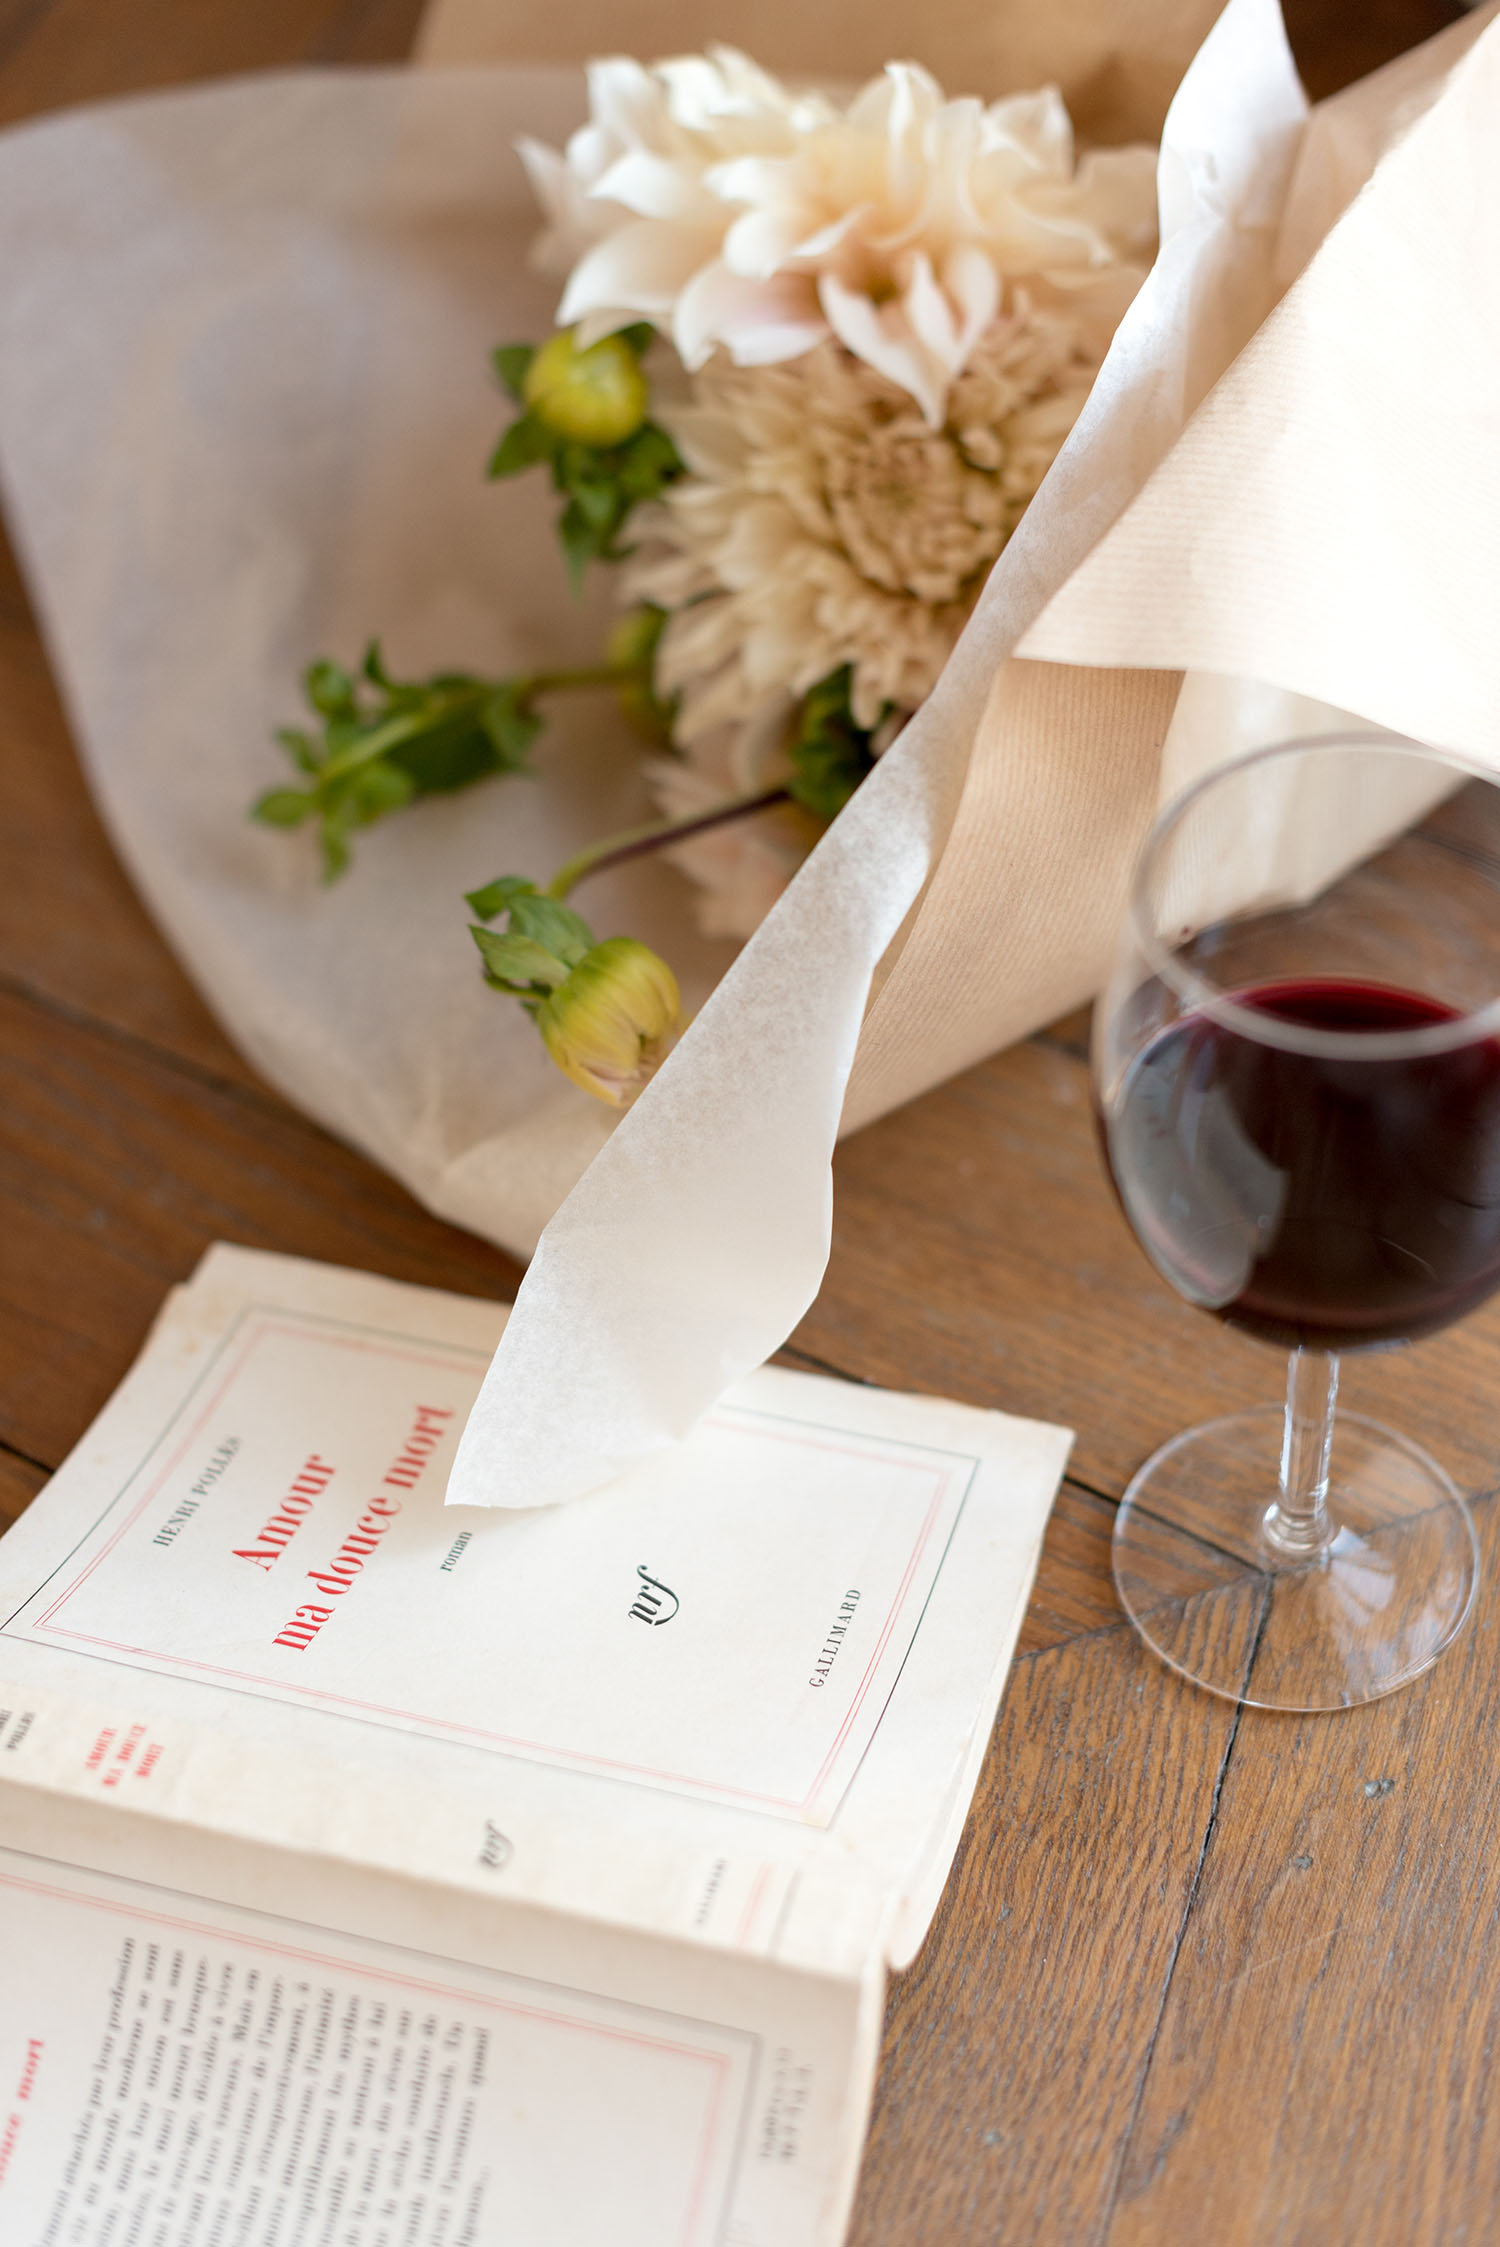 Coco & Vera - Cafe au lait dahlias, red wine, Editions Gallimard novel